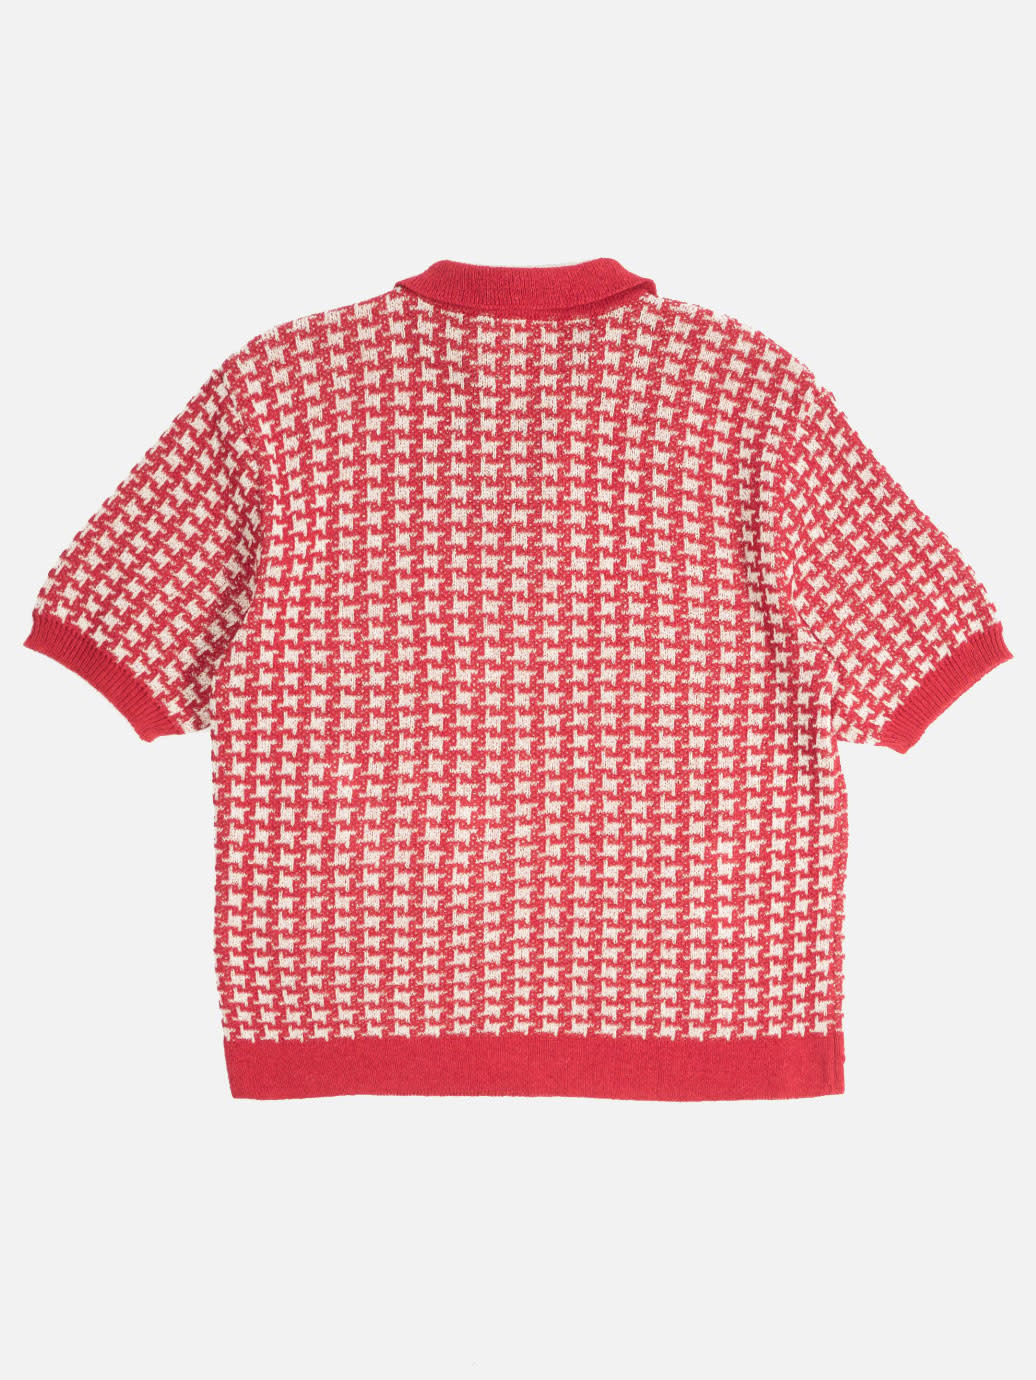 Needles(ニードルズ) Polo Sweater - Checkered